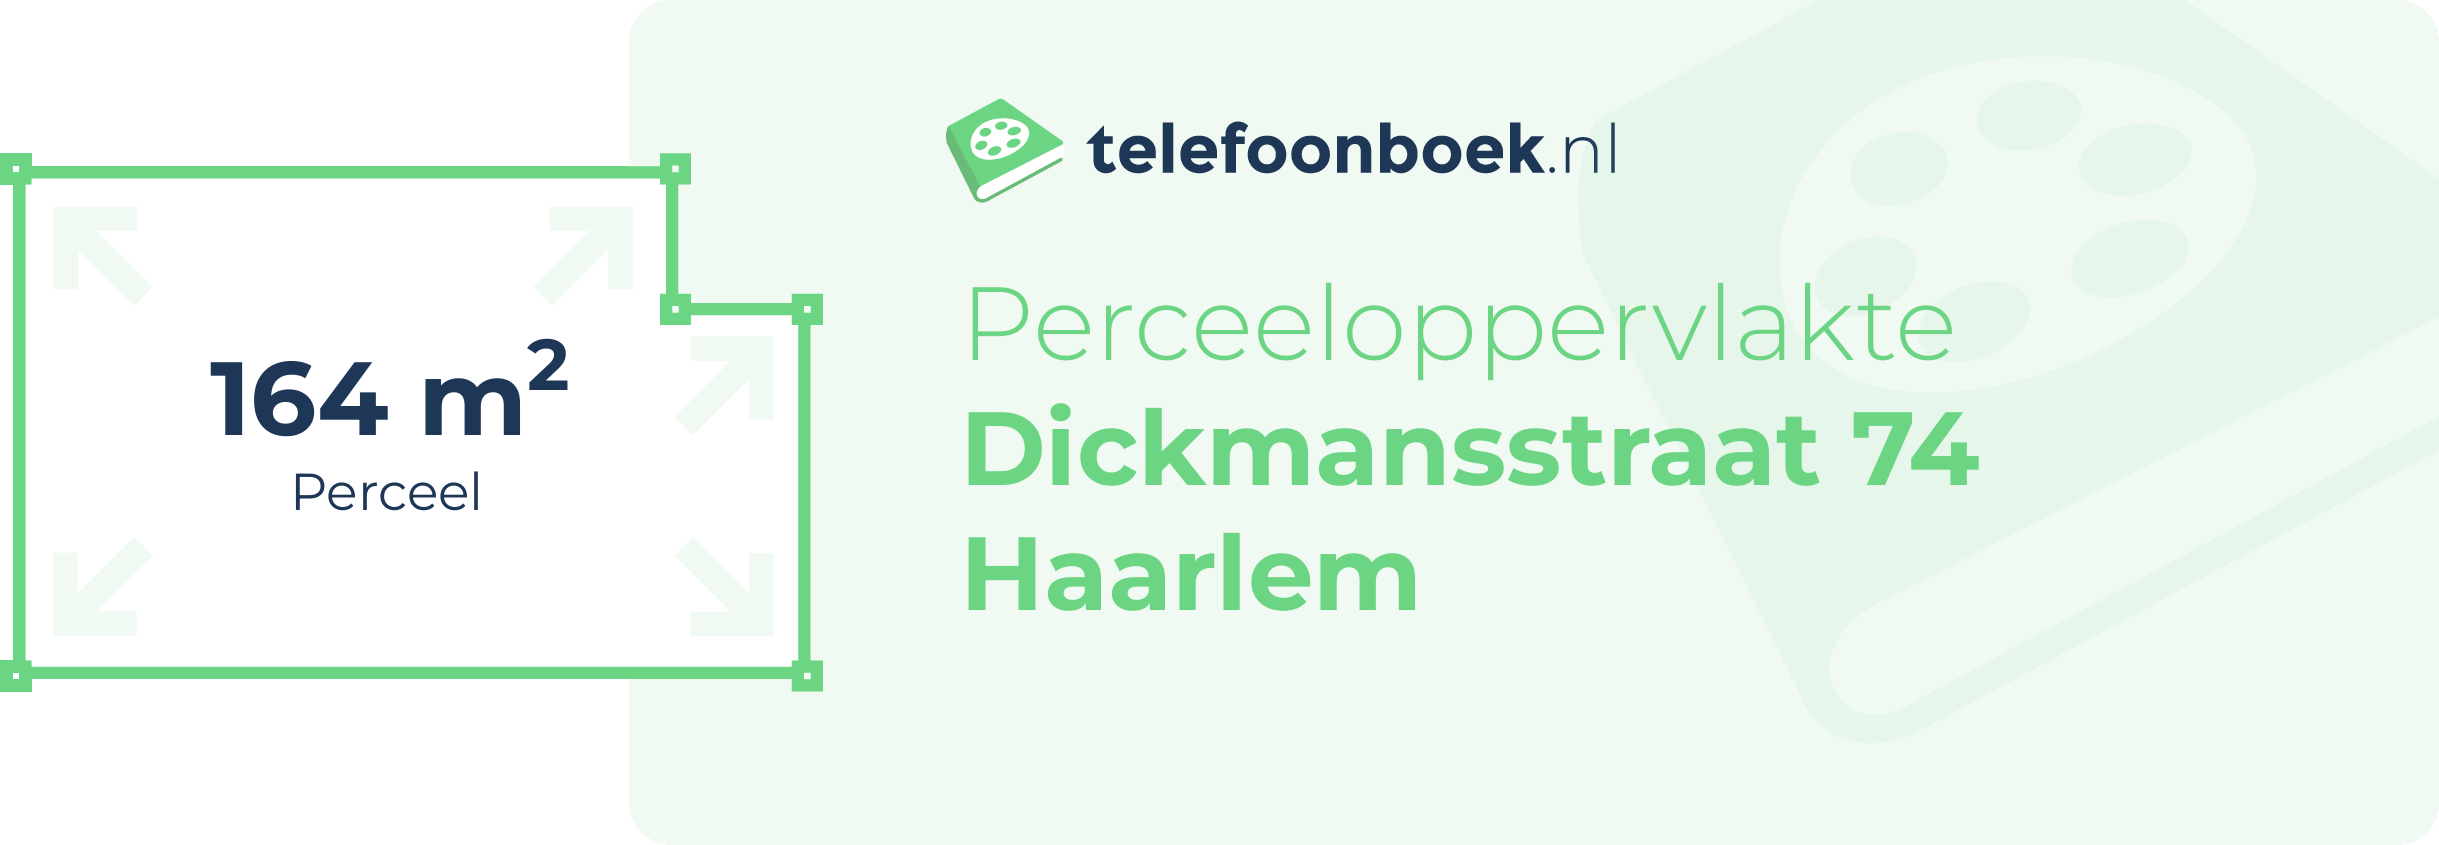 Perceeloppervlakte Dickmansstraat 74 Haarlem